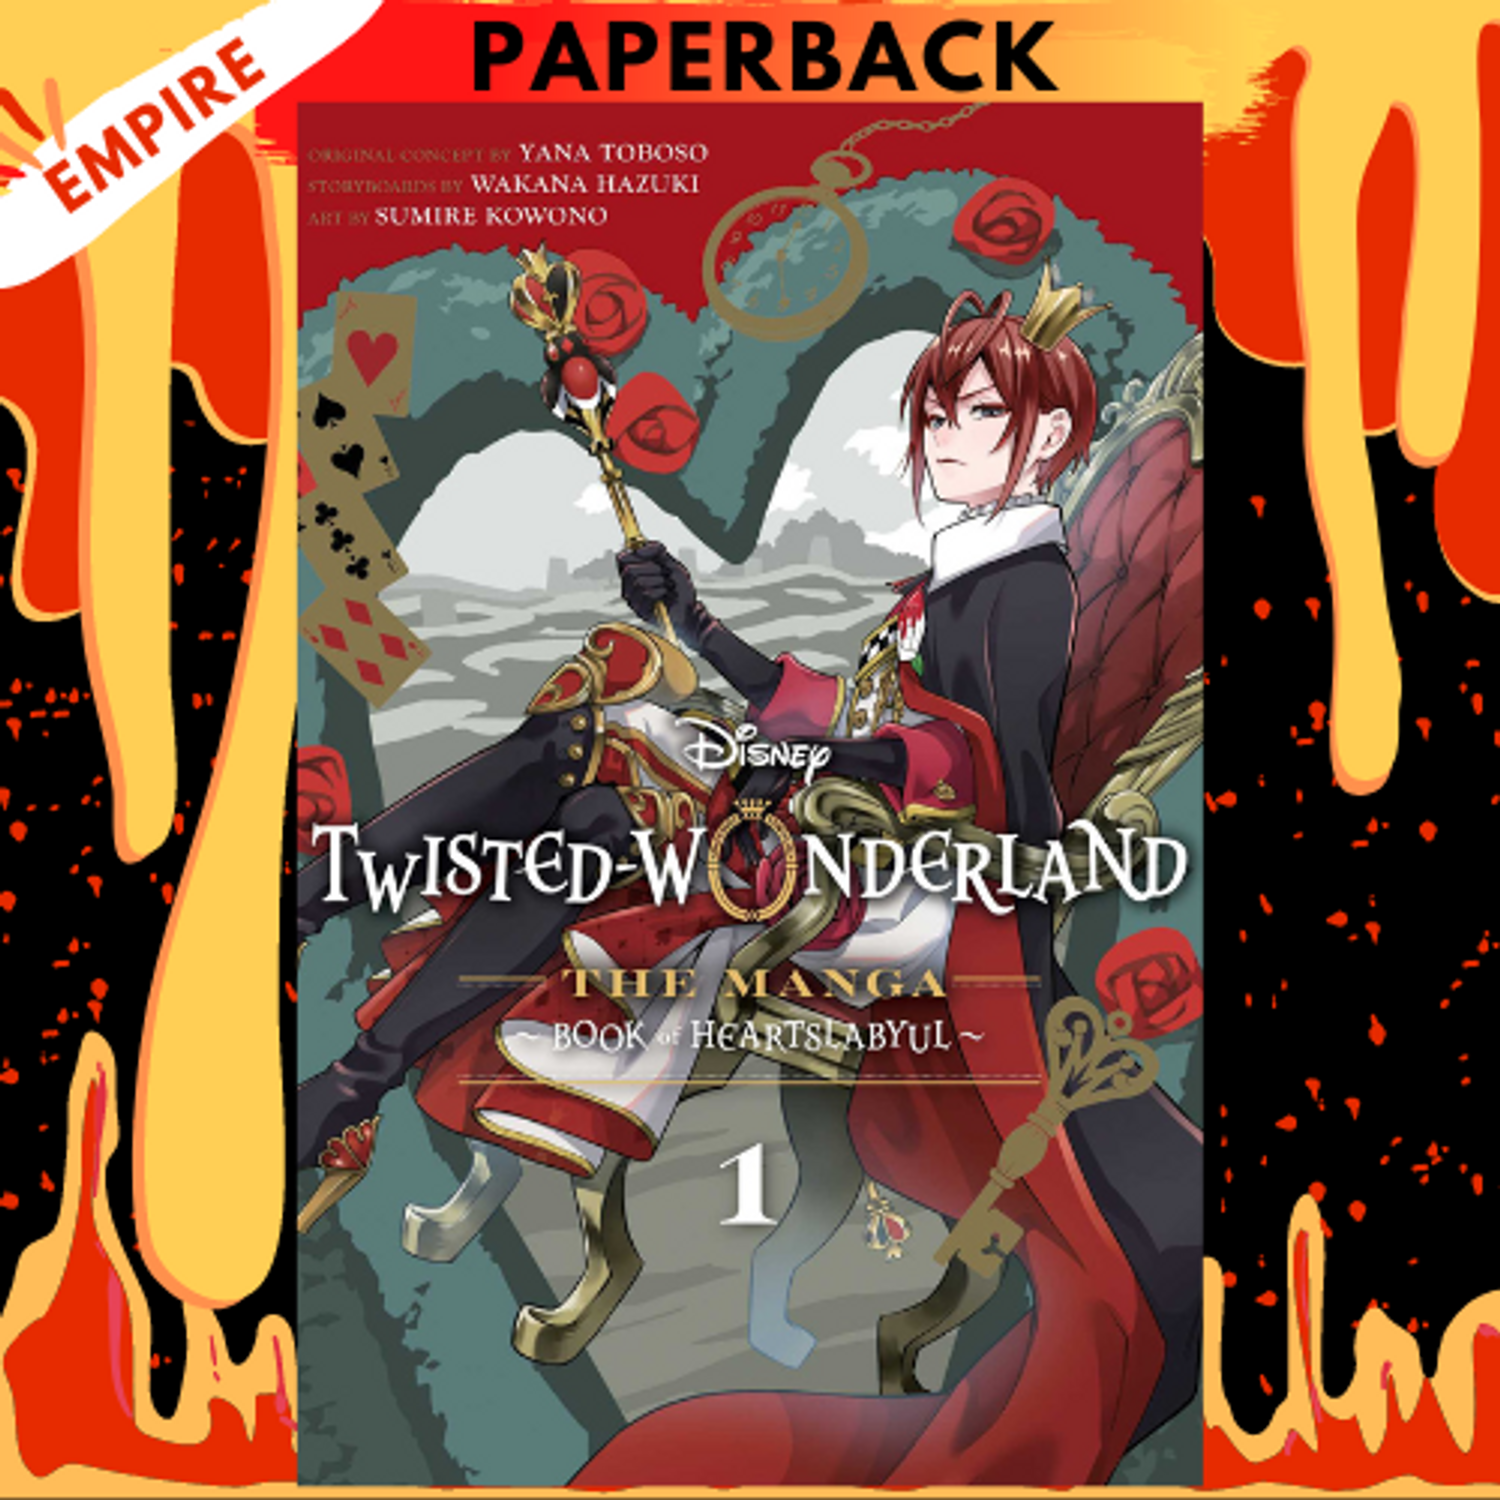 Disney Twisted-Wonderland, Vol. 1: The Manga: Book of Heartslabyul (1)